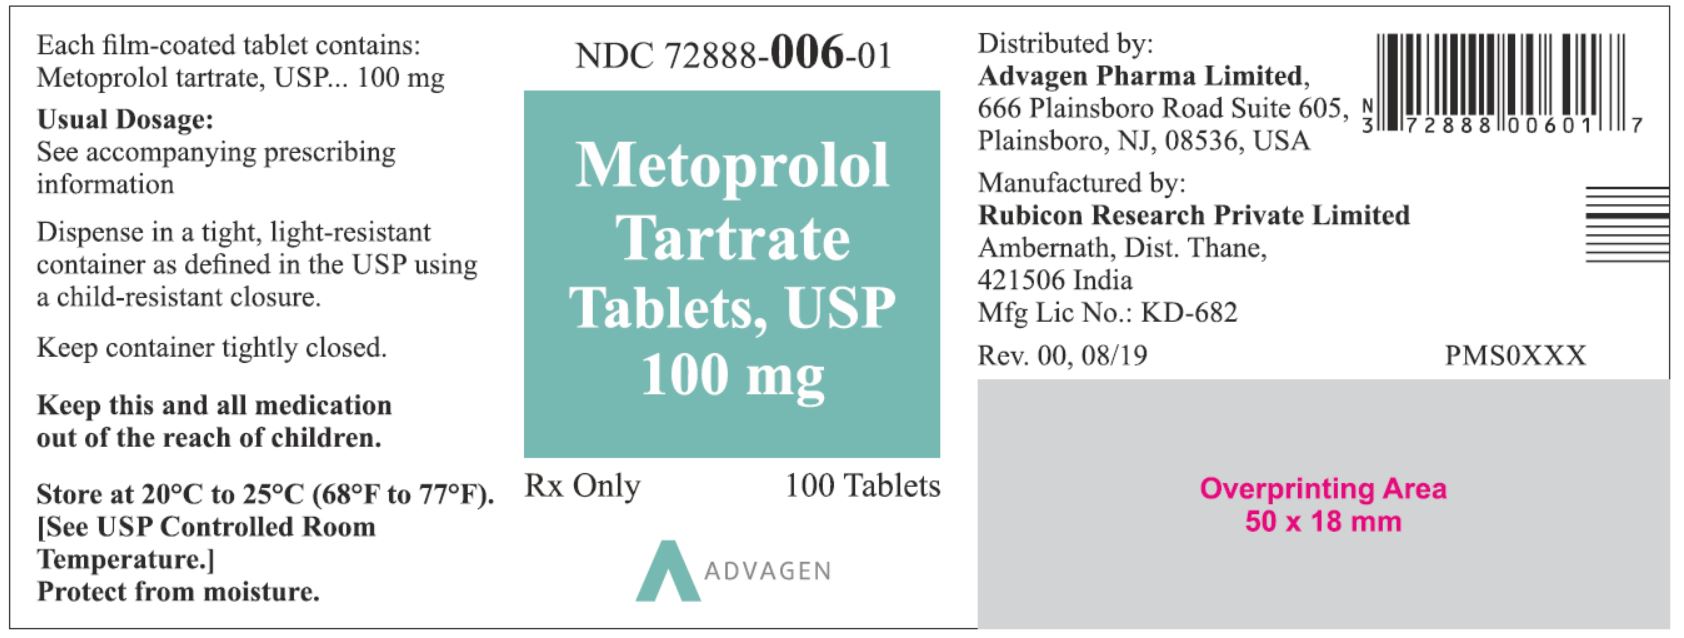 NDC: <a href=/NDC/72888-006-01>72888-006-01</a> - Metoprolol Tartrate Tablets, USP 100 mg - 100 Tablets